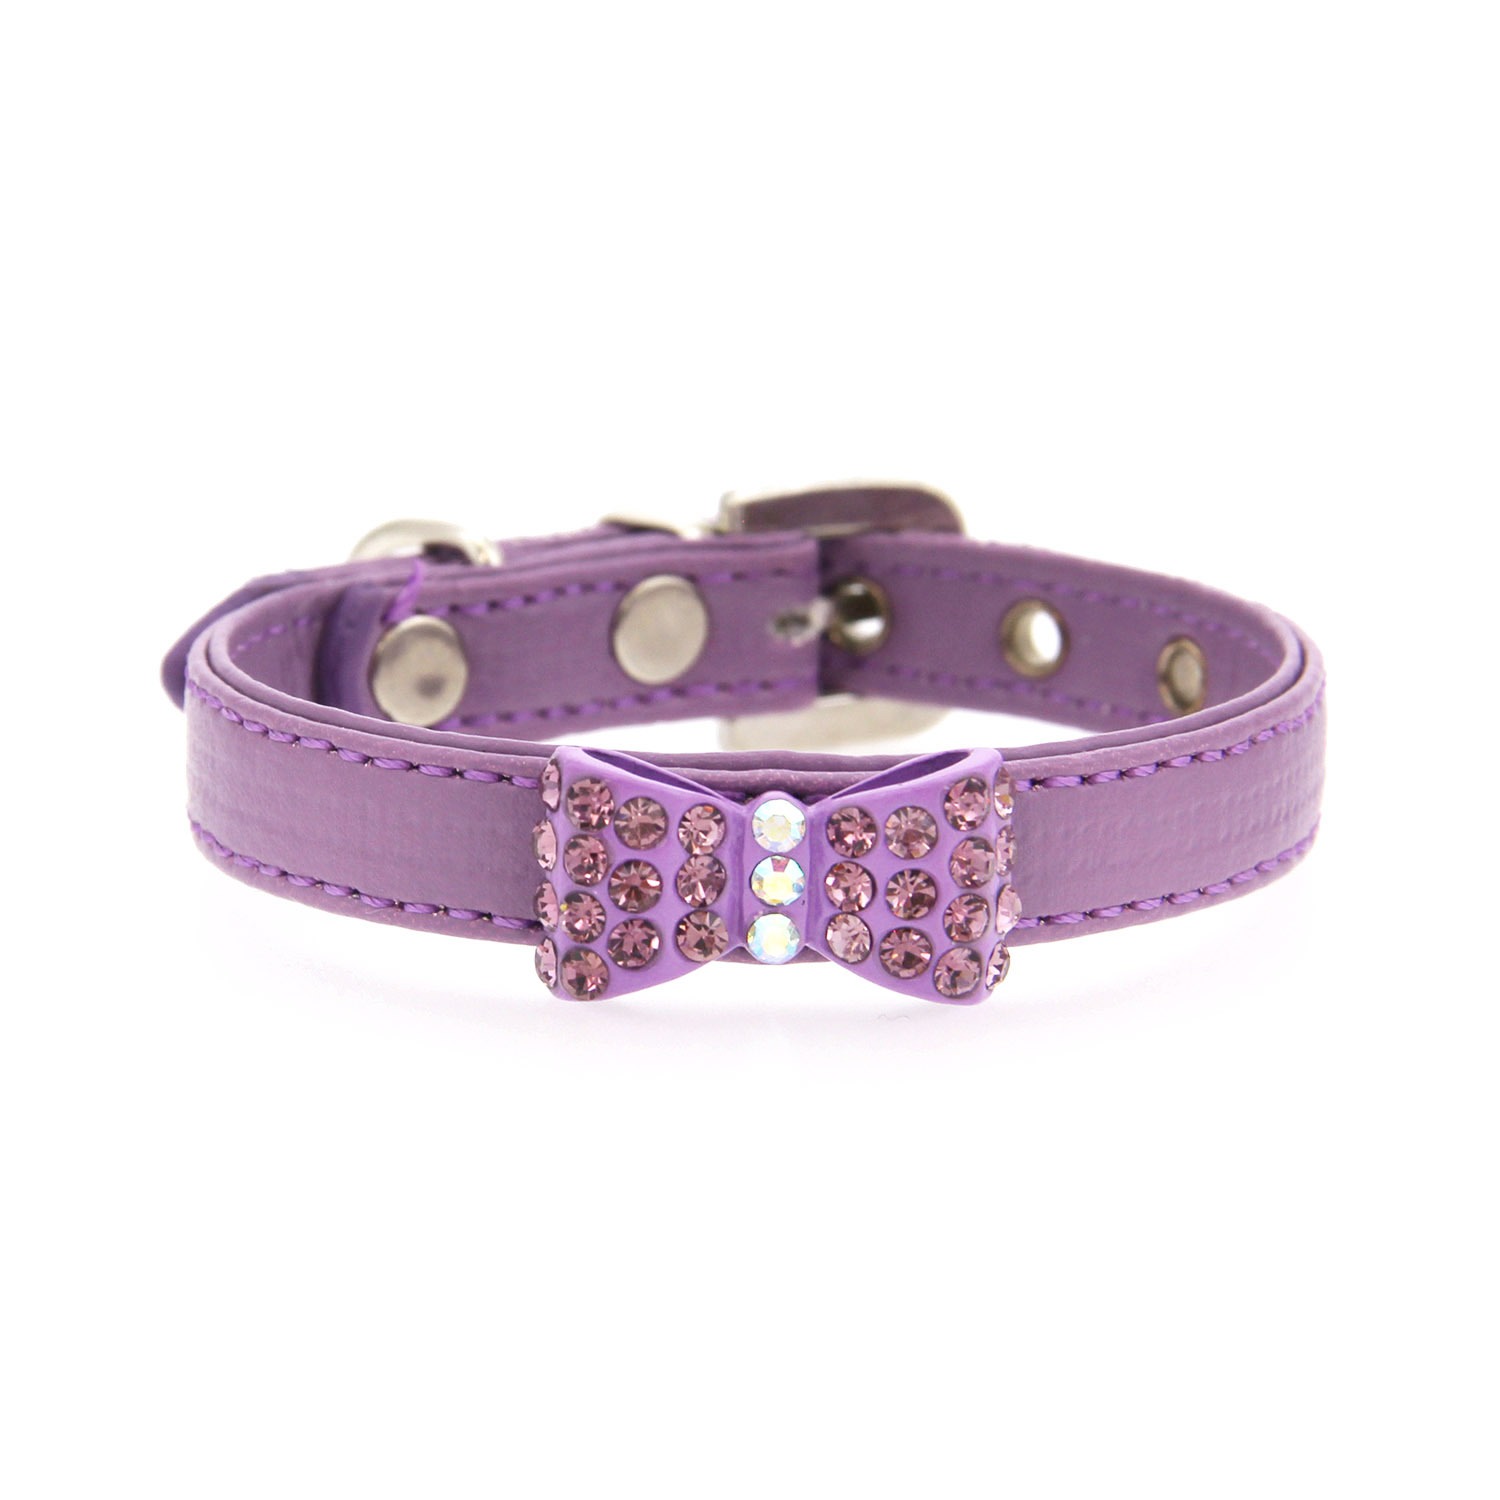 Bow-dacious Crystal Dog Collar - Lavender